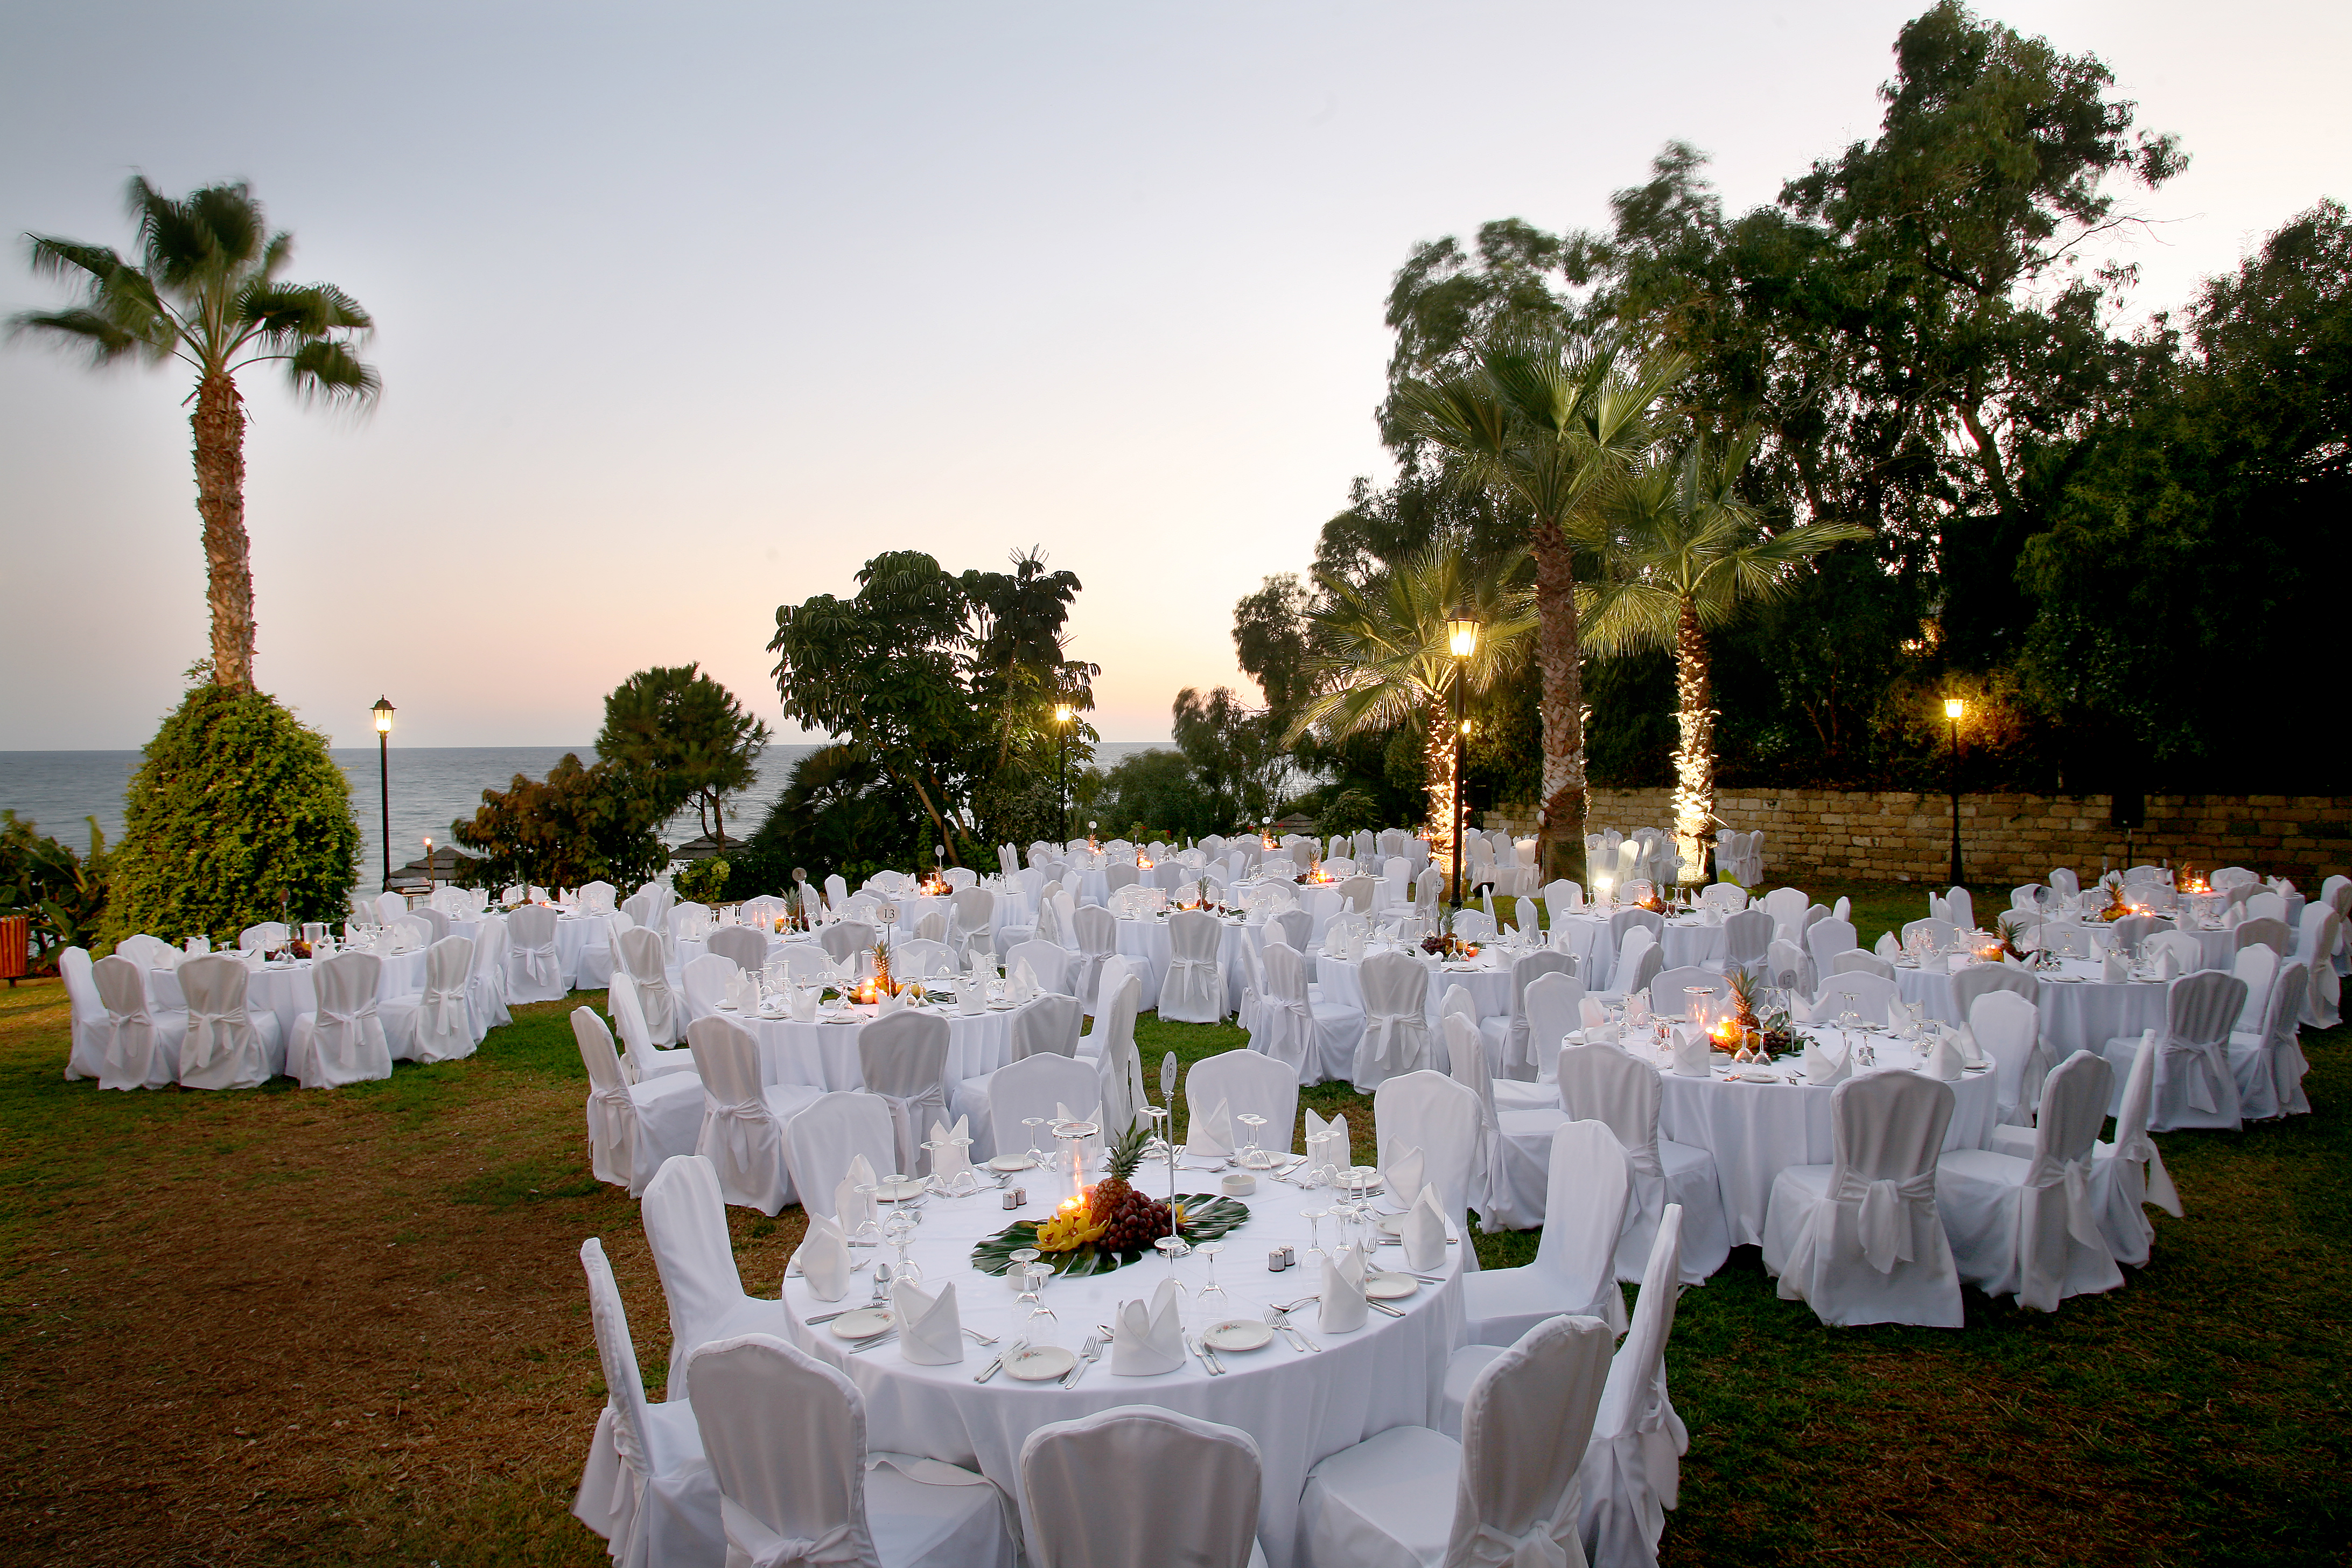 Book your wedding day in Atlantica Bay Hotel